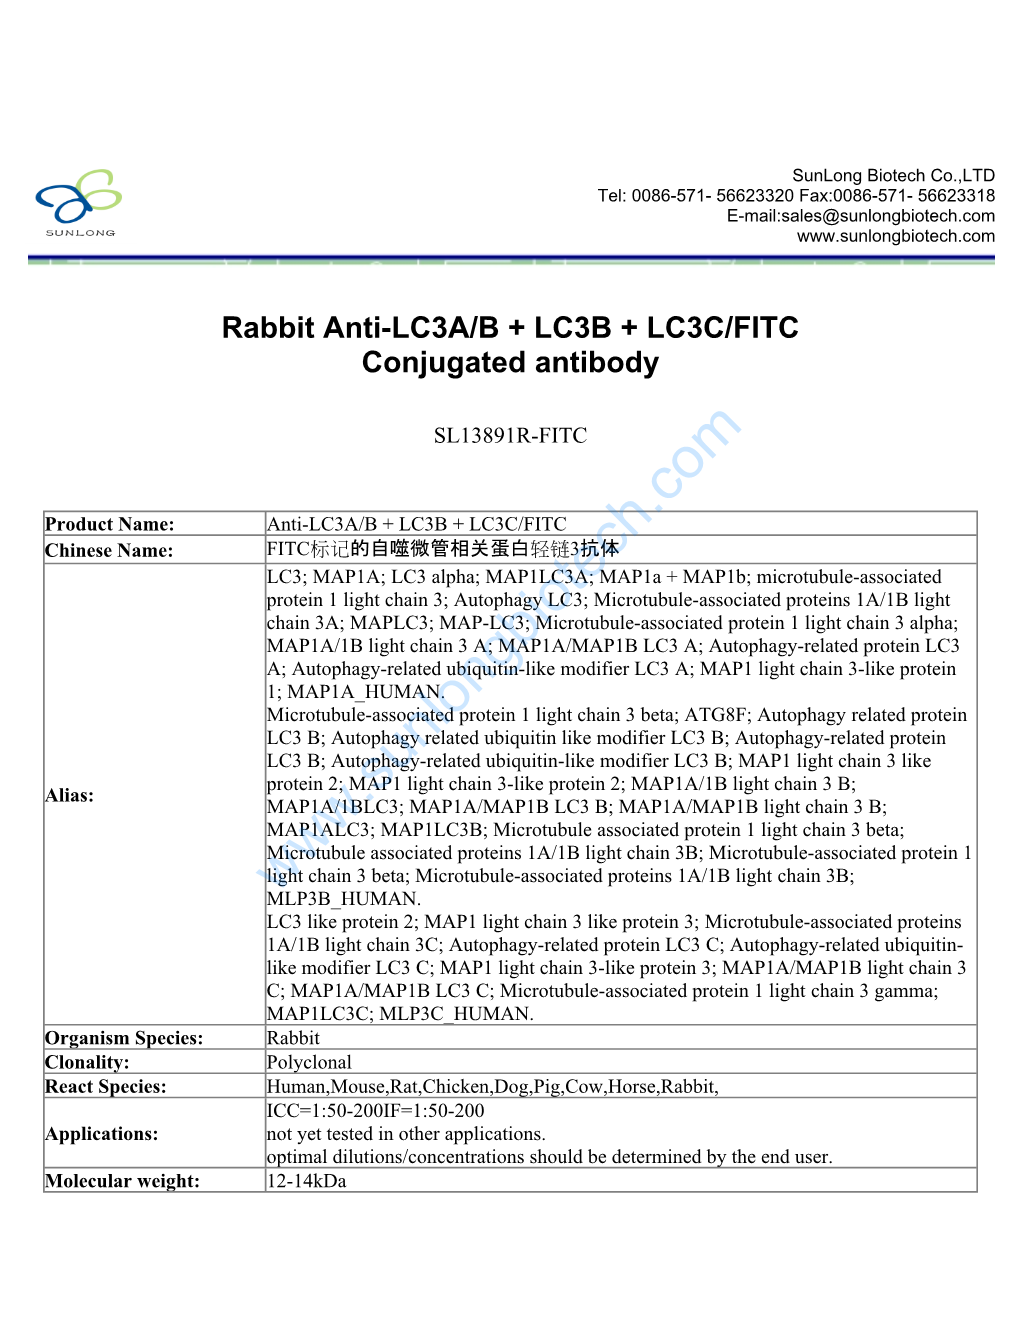 Rabbit Anti-LC3A/B + LC3B + LC3C/FITC Conjugated Antibody